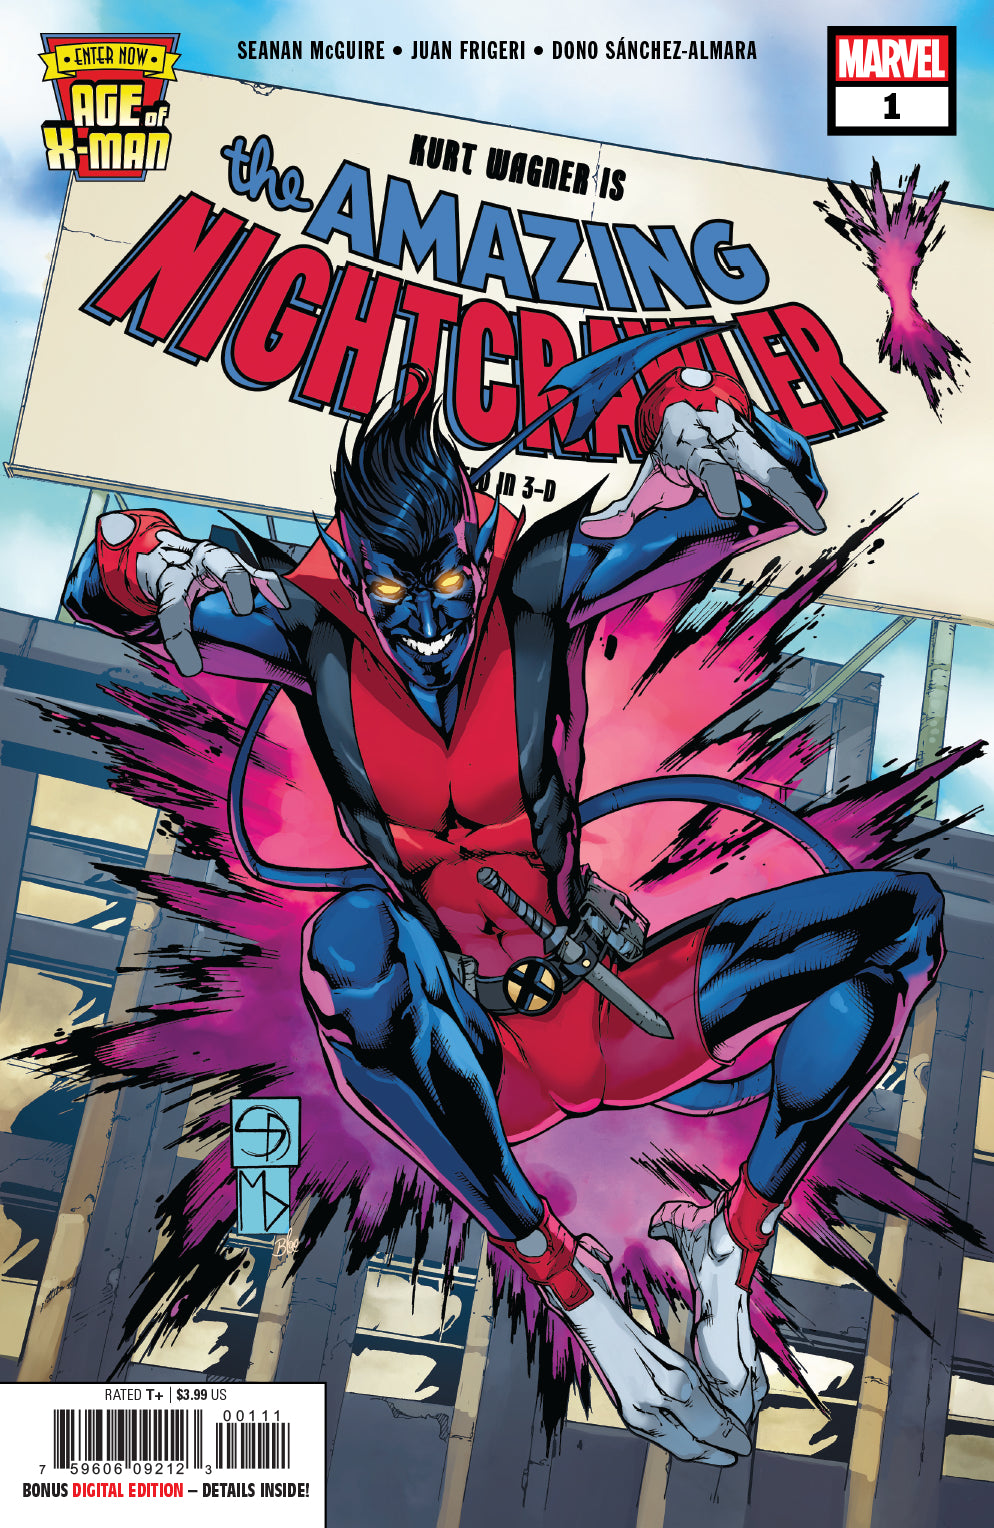 AGE OF X-MAN AMAZING NIGHTCRAWLER #1 (OF 5) COVER